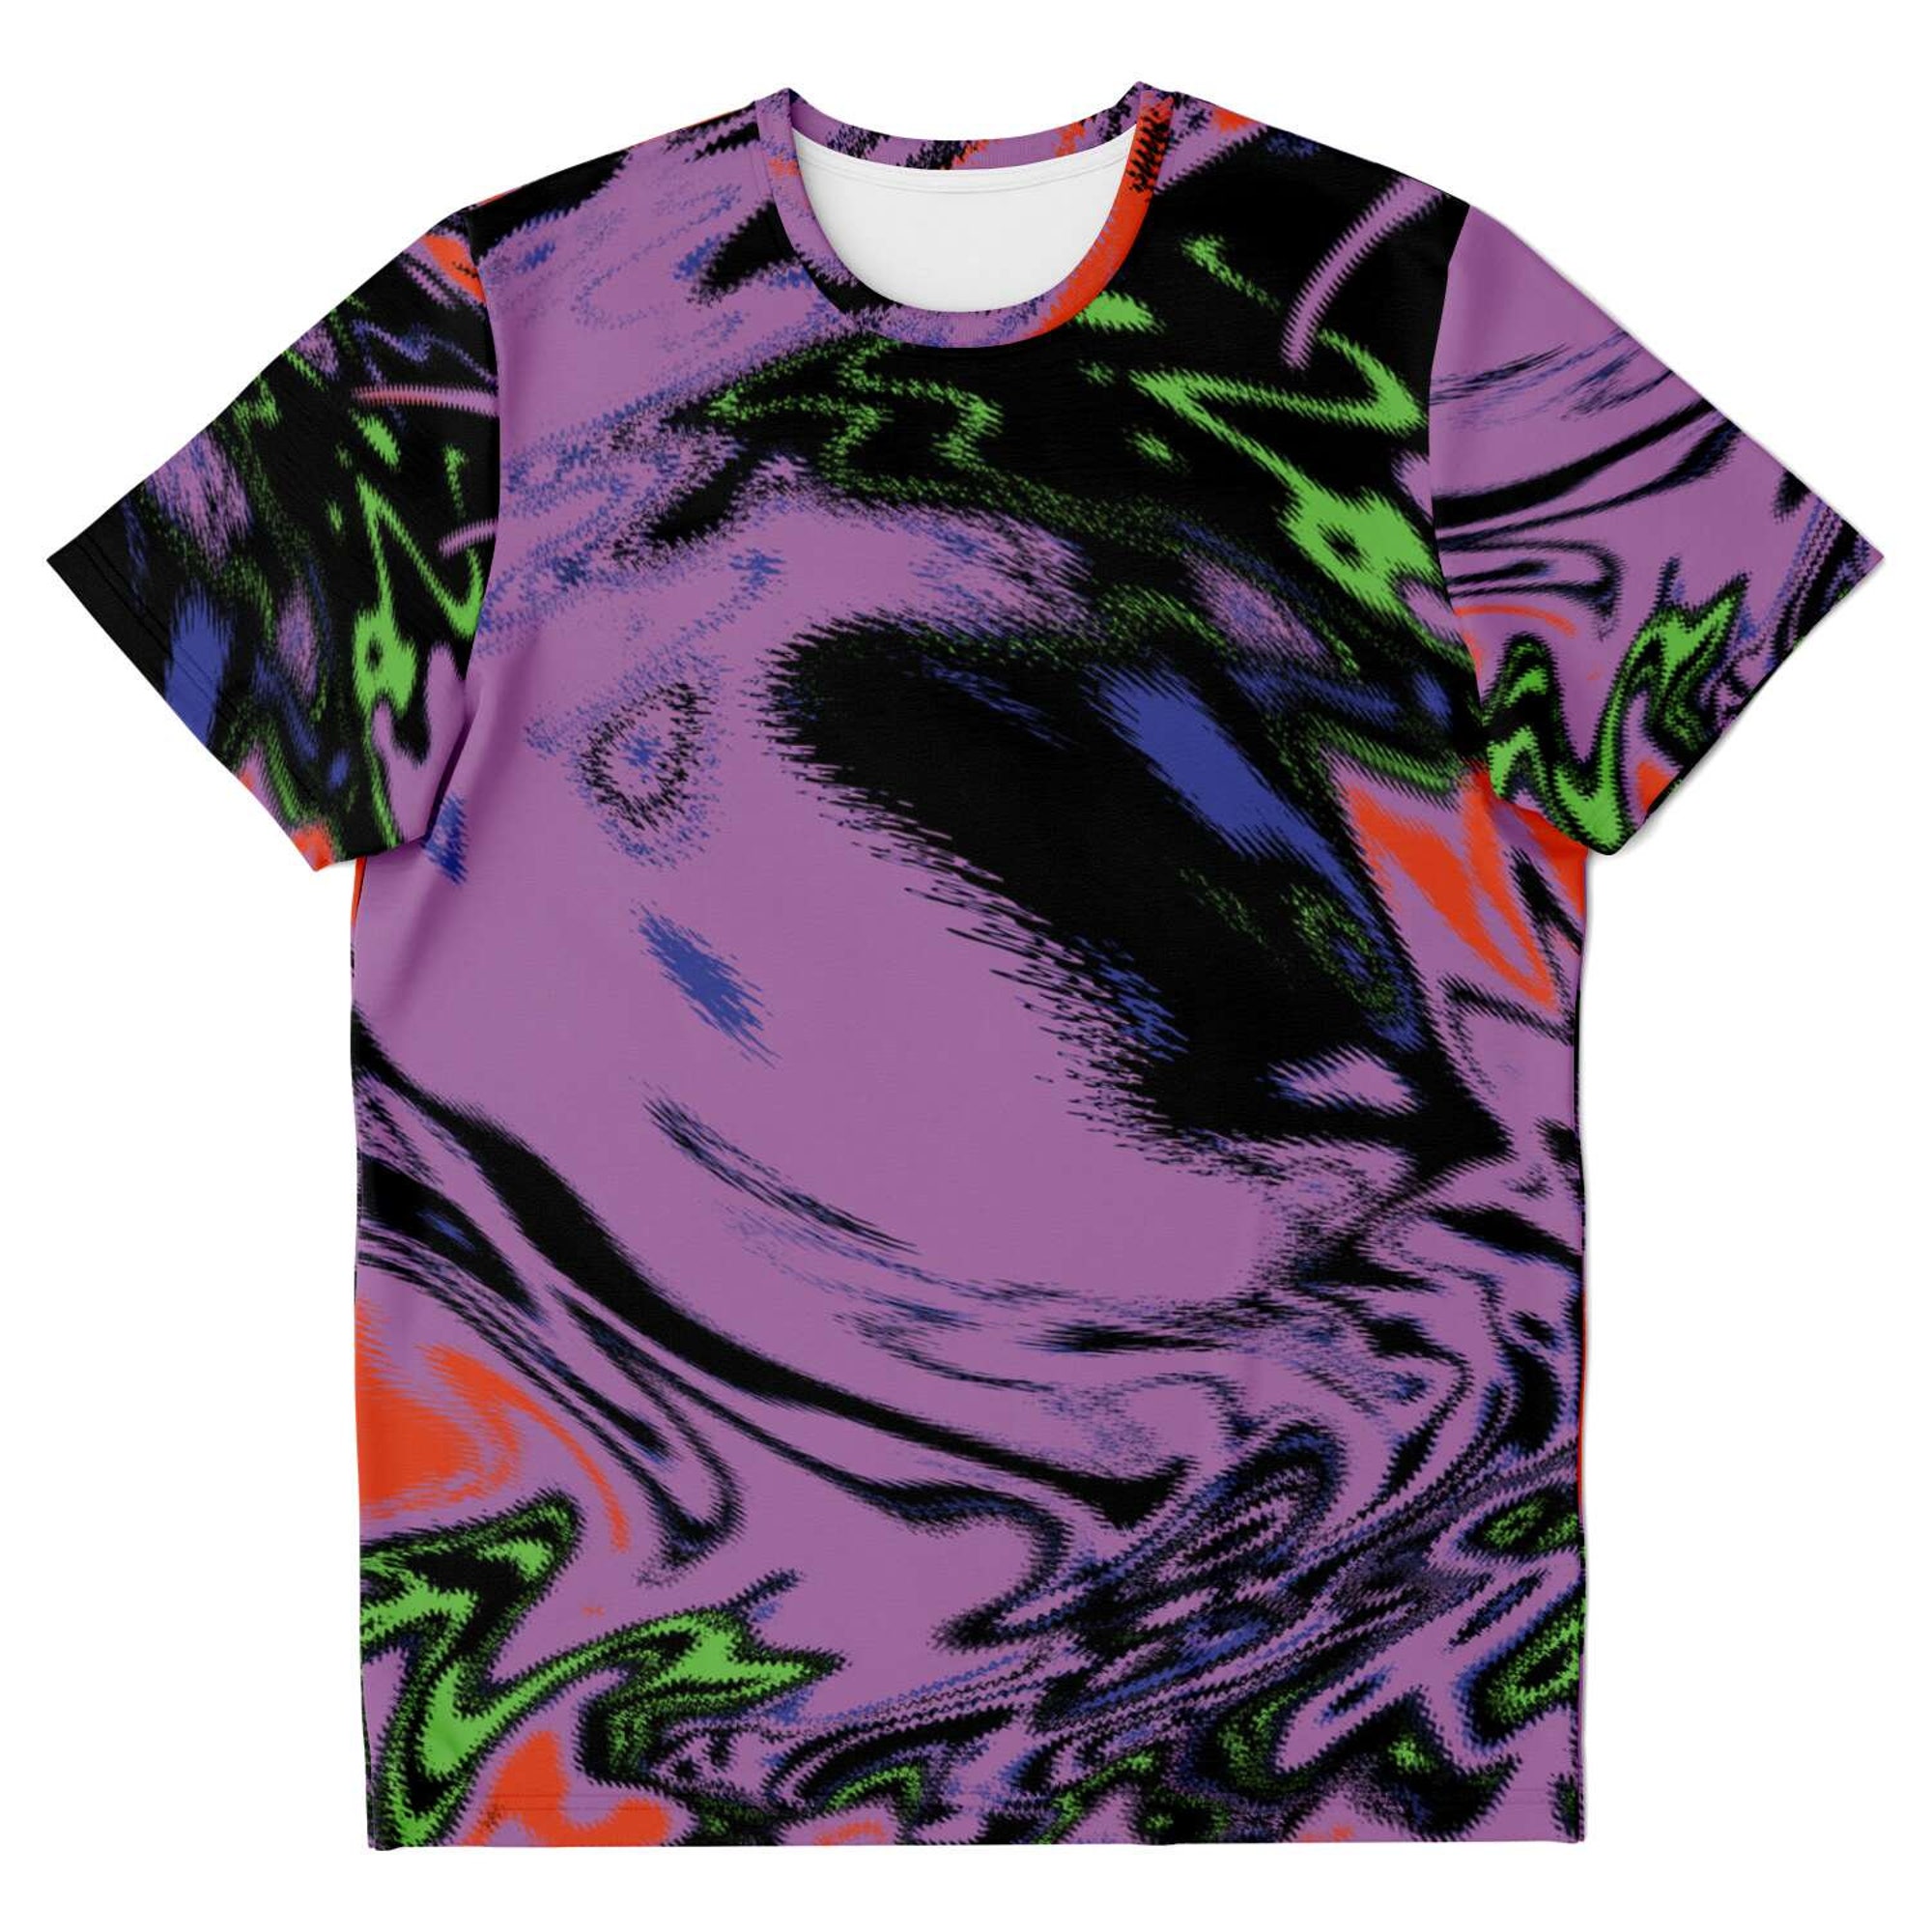 Retro Hipster Beats Uranium Tint Psychedelic Glitch Pop Electric Digital Art Music 3D T Shirt